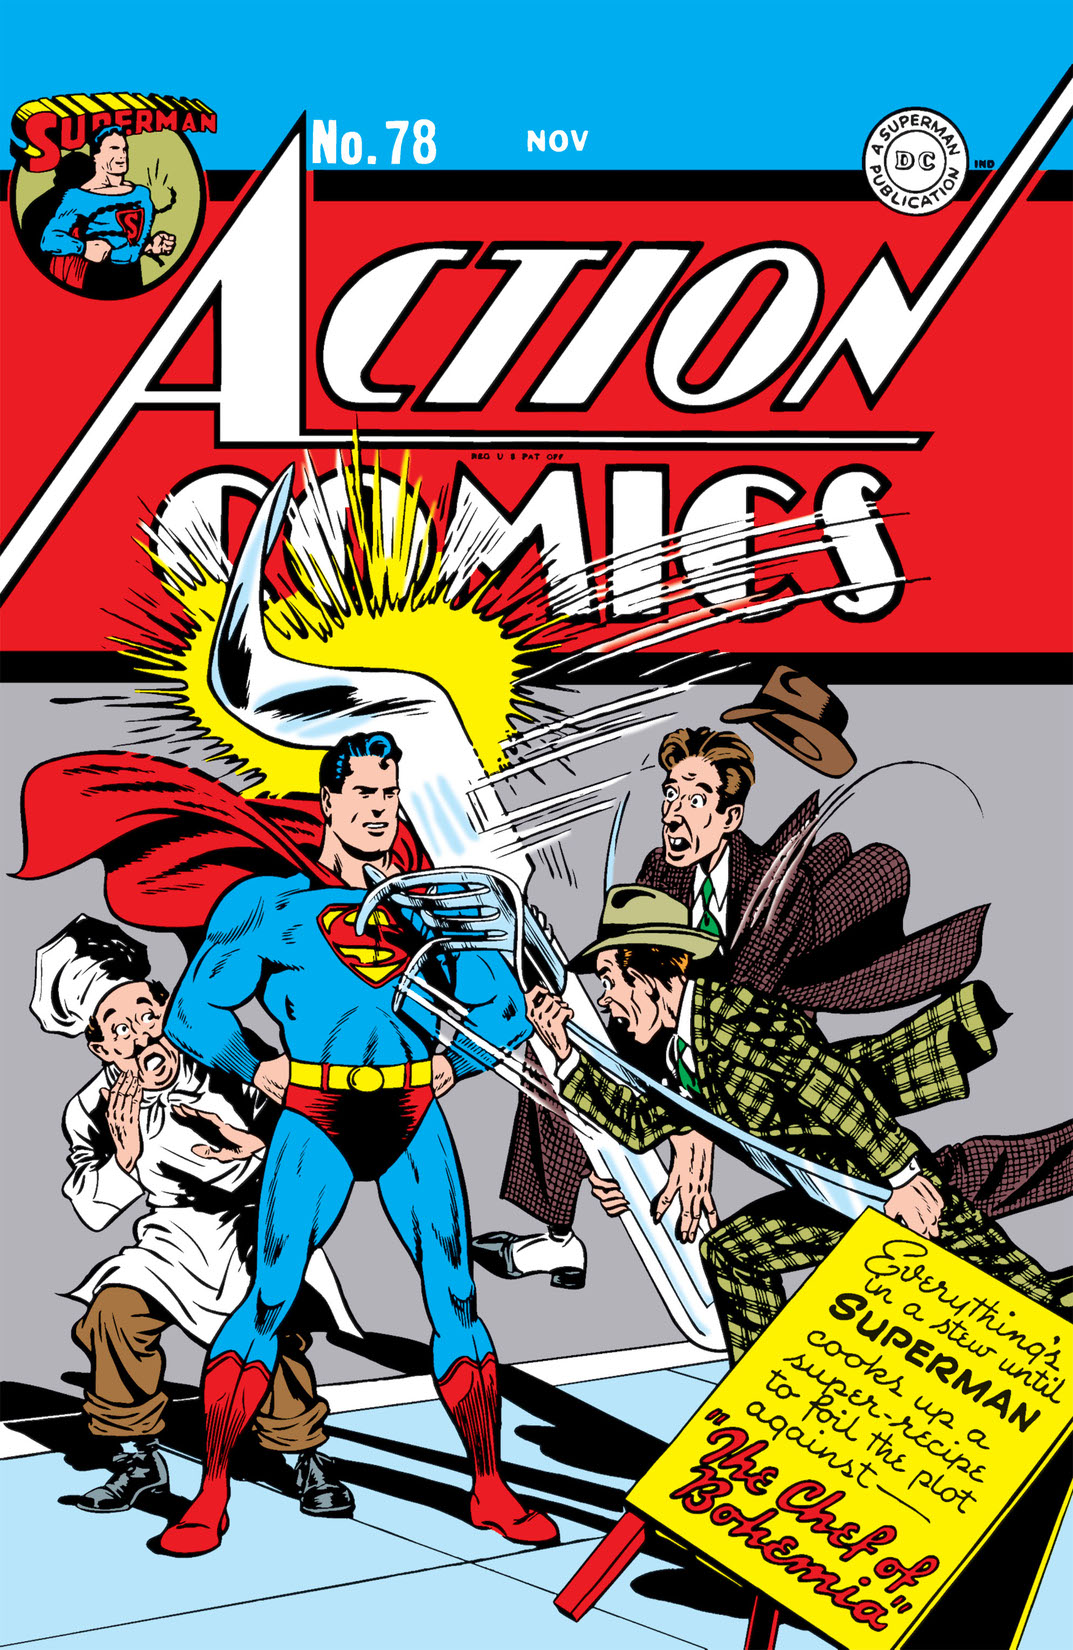 Action Comics (1938-) #78 preview images